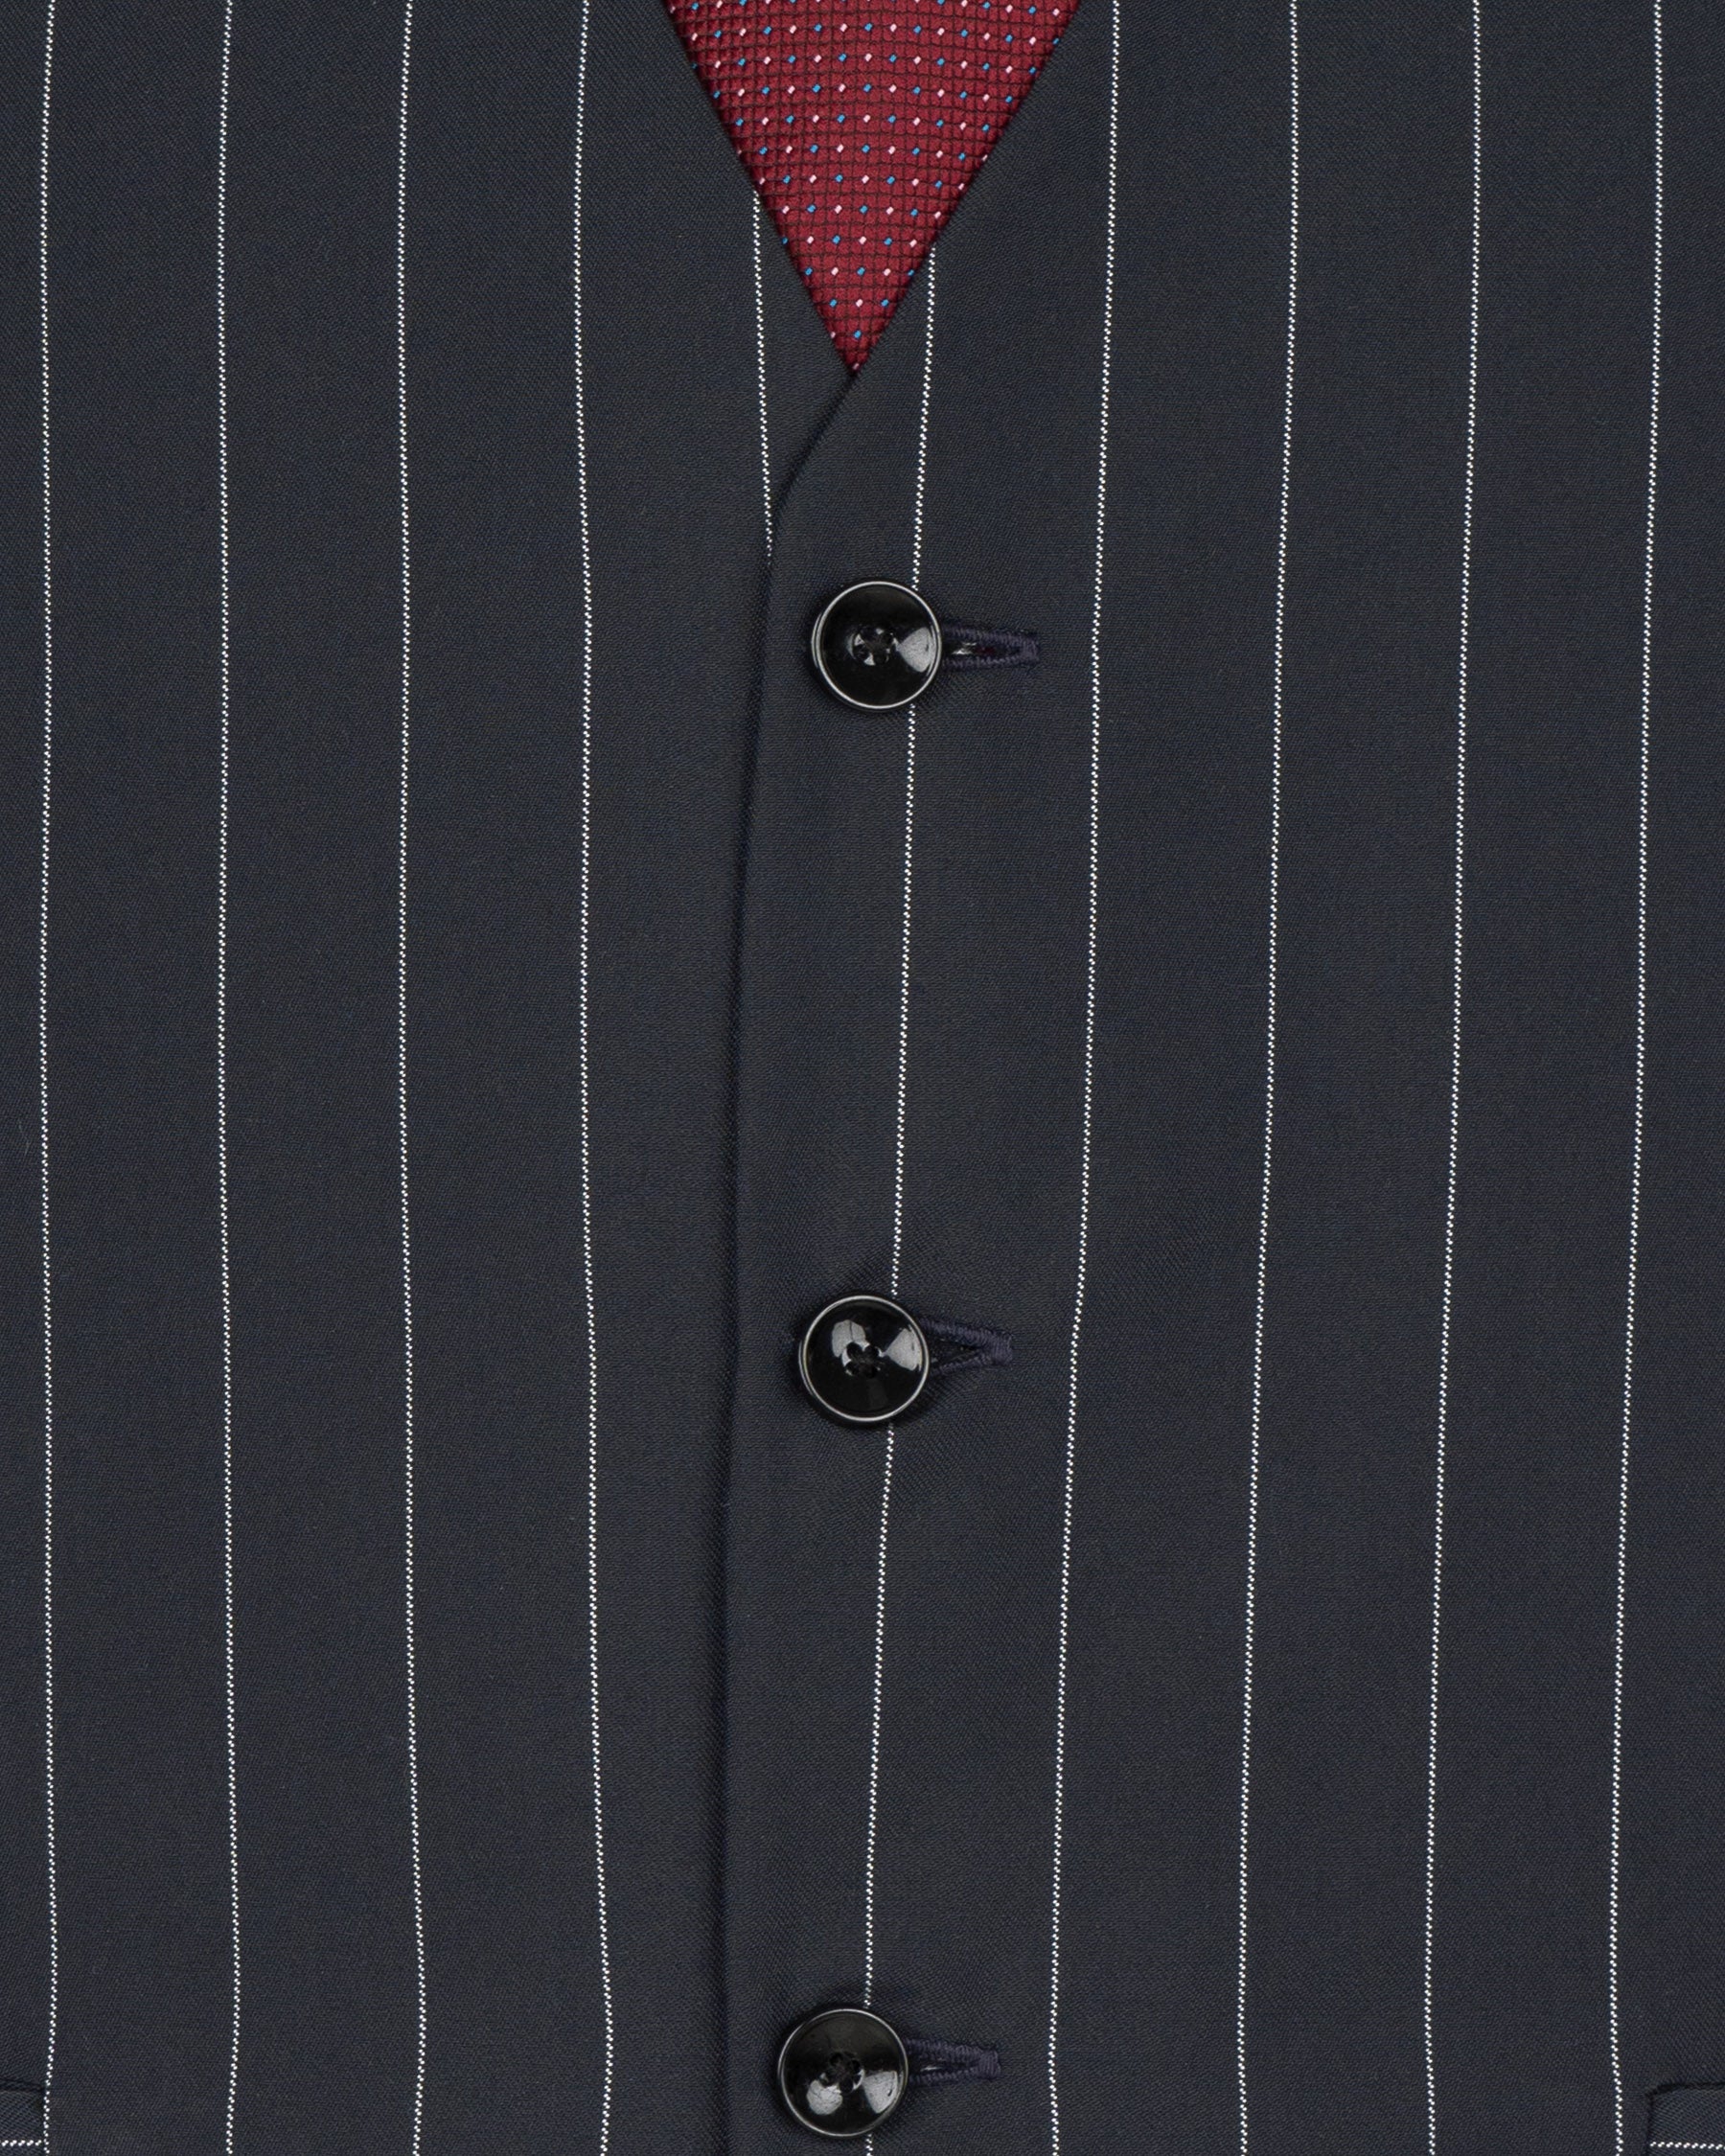 Charcoal Striped Wool Rich Waistcoat V1590-36, V1590-38, V1590-40, V1590-42, V1590-44, V1590-46, V1590-48, V1590-50, V1590-52, V1590-54, V1590-56, V1590-58, V1590-60